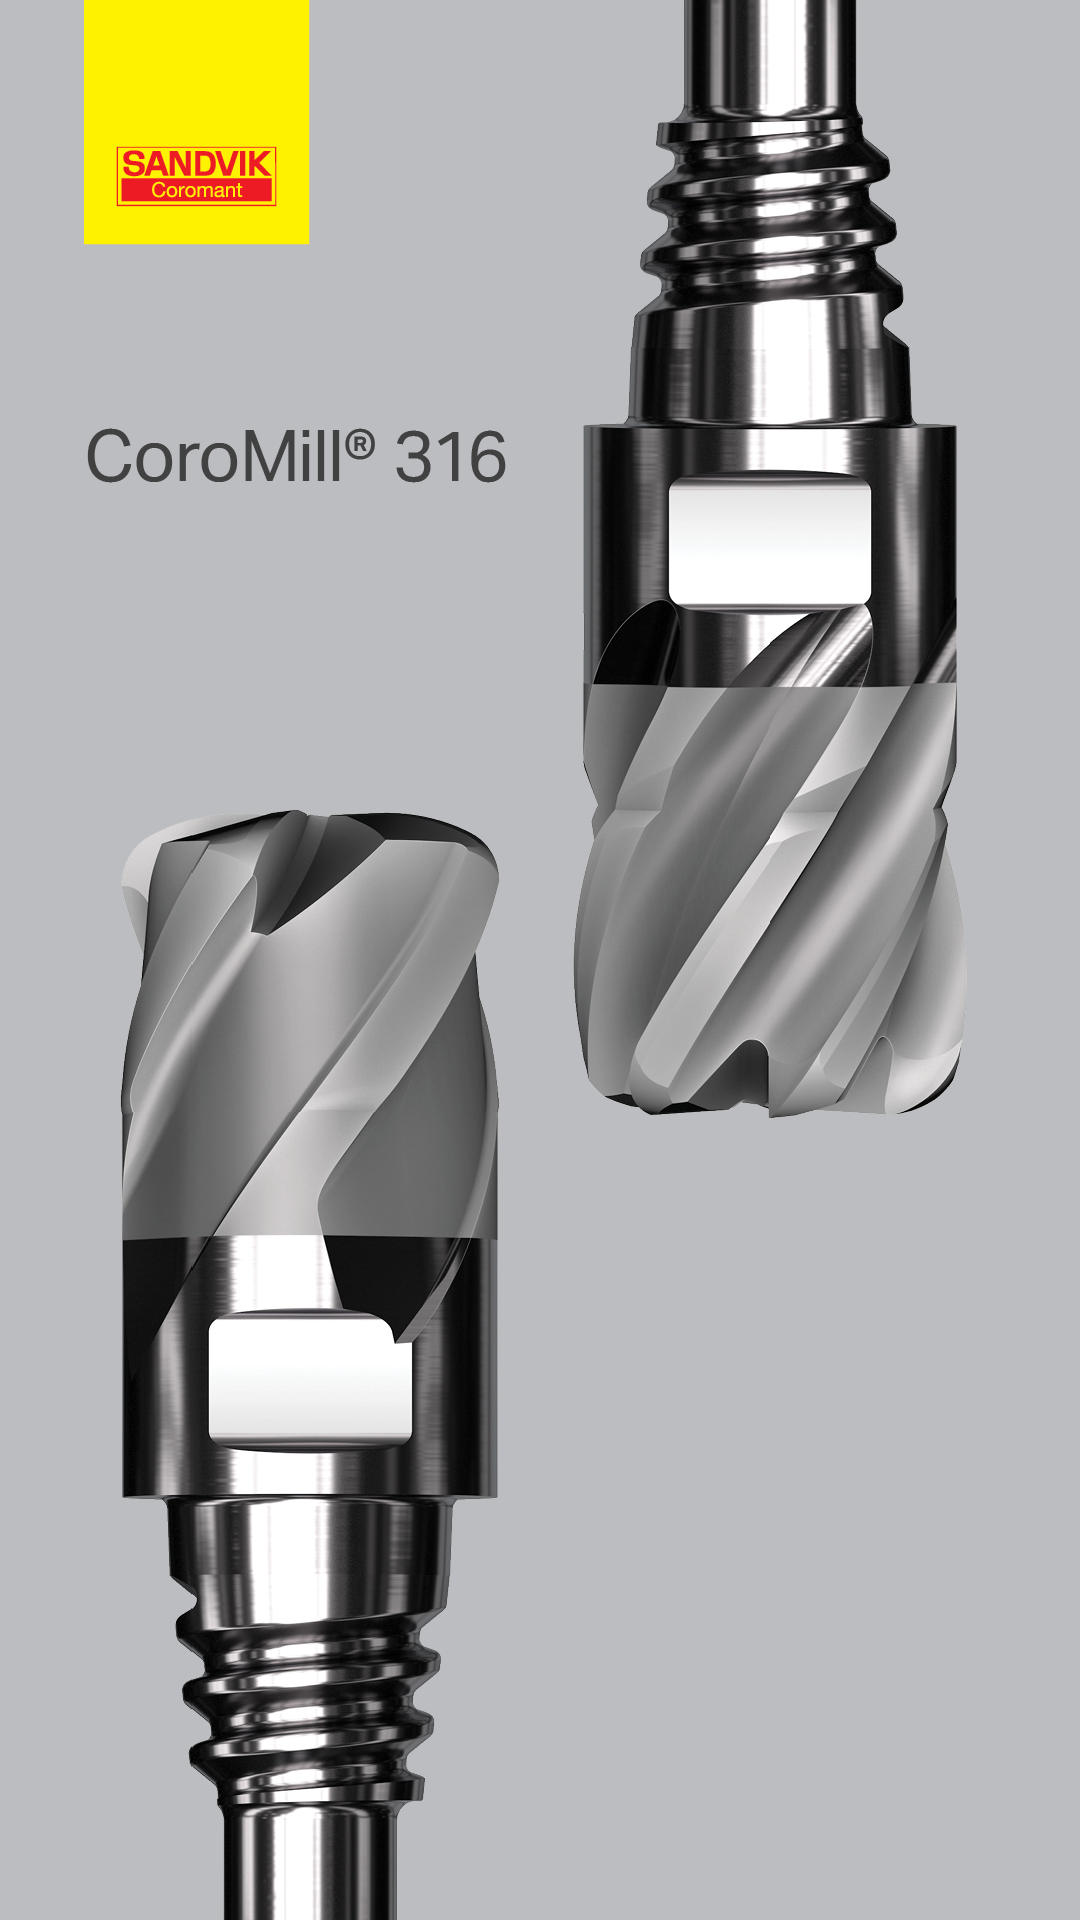 Sandvik Coromant CoroMill 316